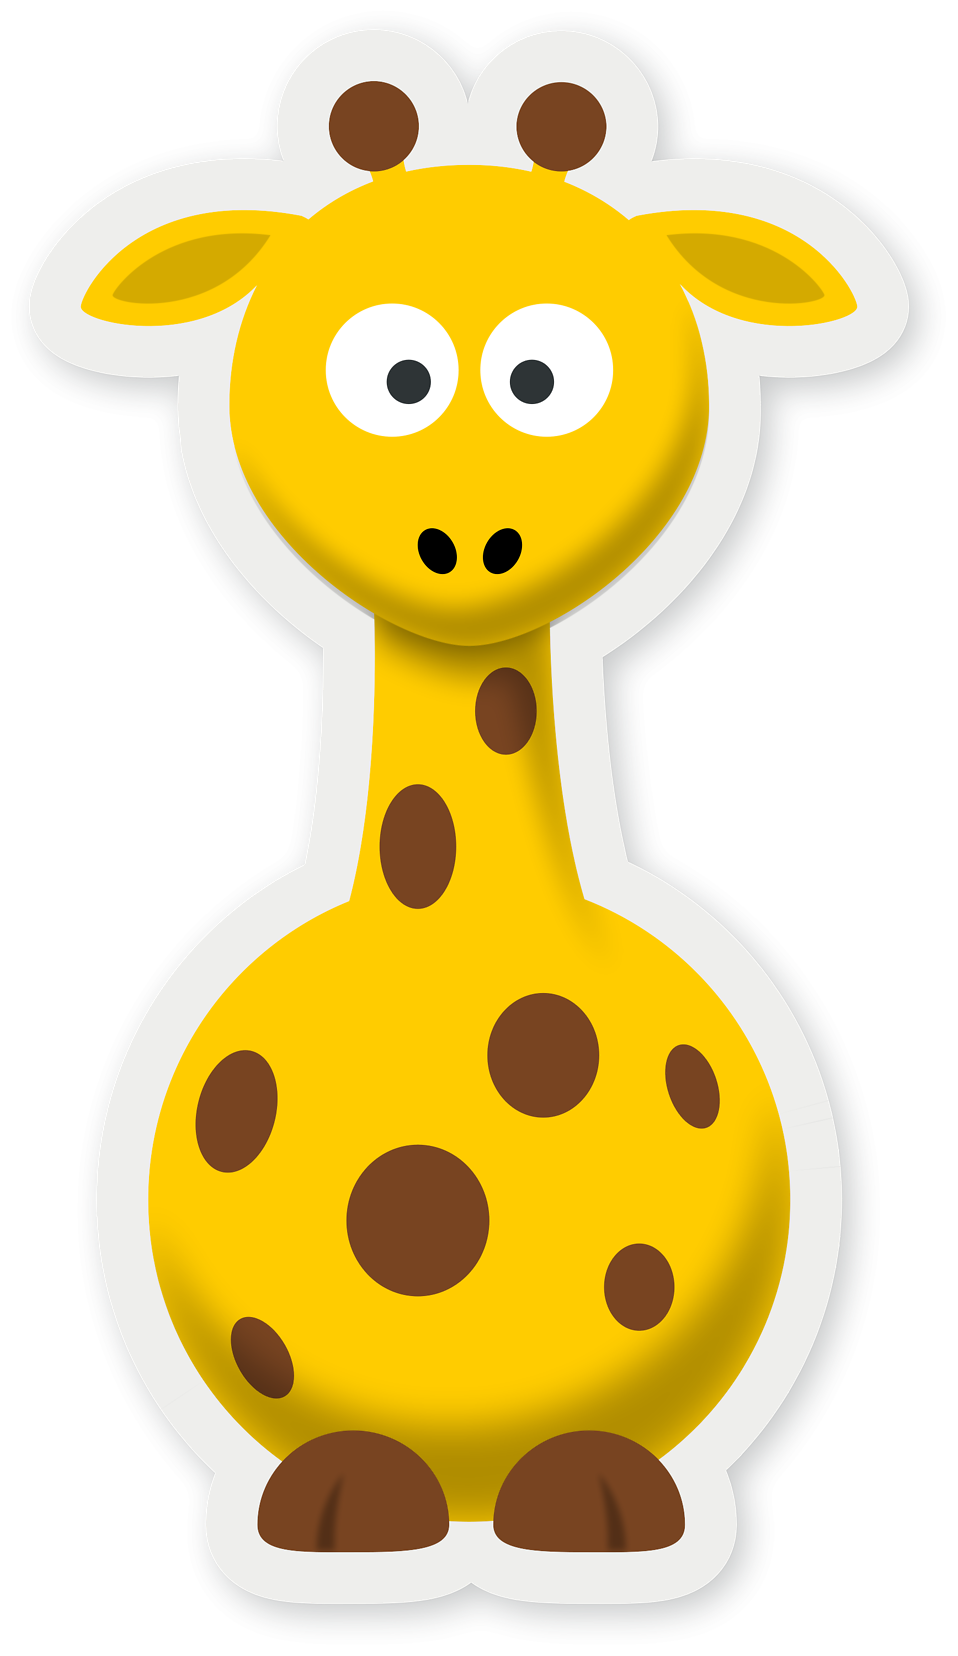 Giraffe abstract